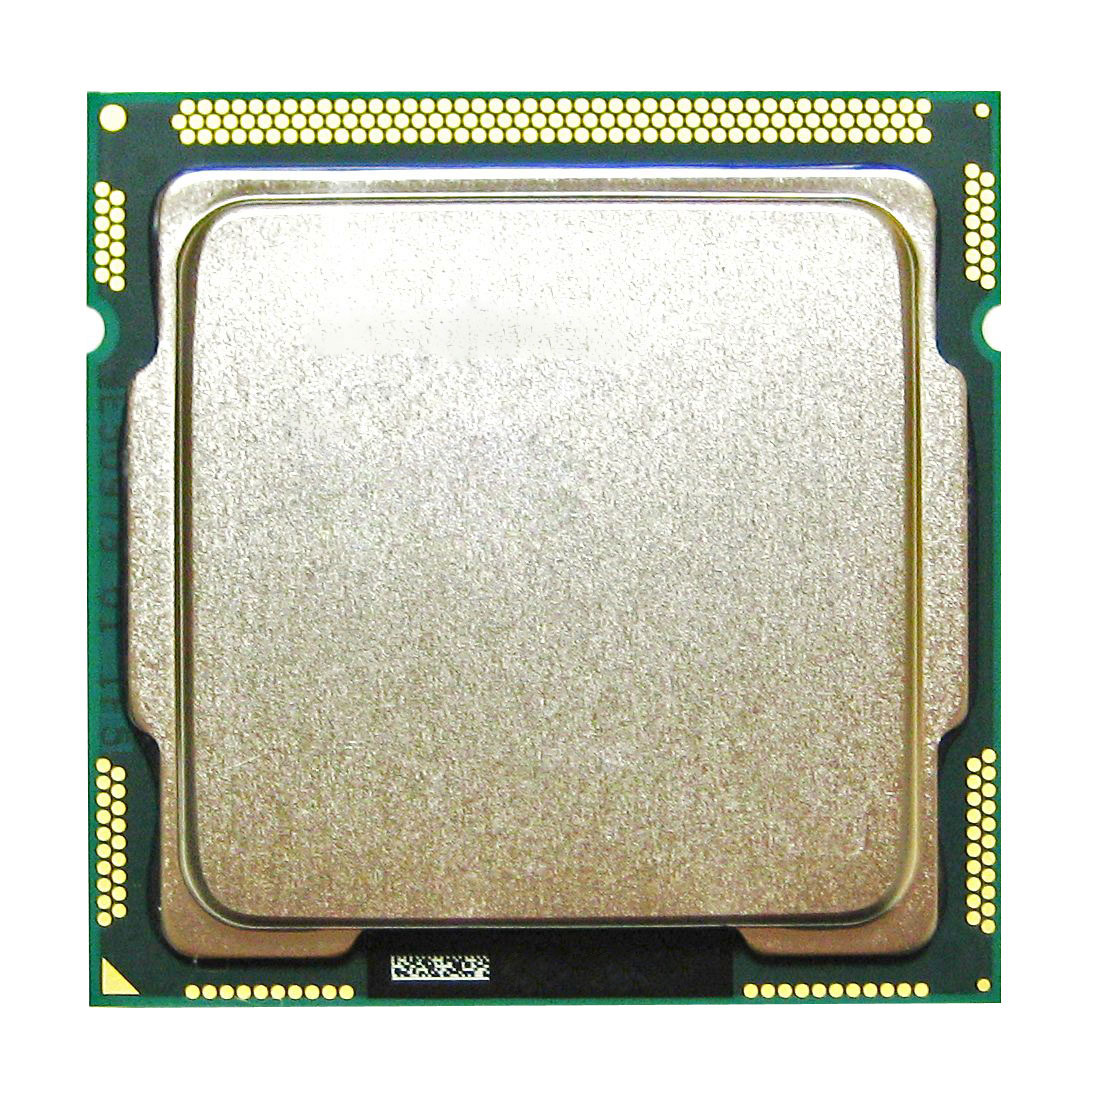 LN061AV HP 2.50GHz 5.00GT/s DMI 6MB L3 Cache Intel Core i5-2400S Quad Core Desktop Processor Upgrade